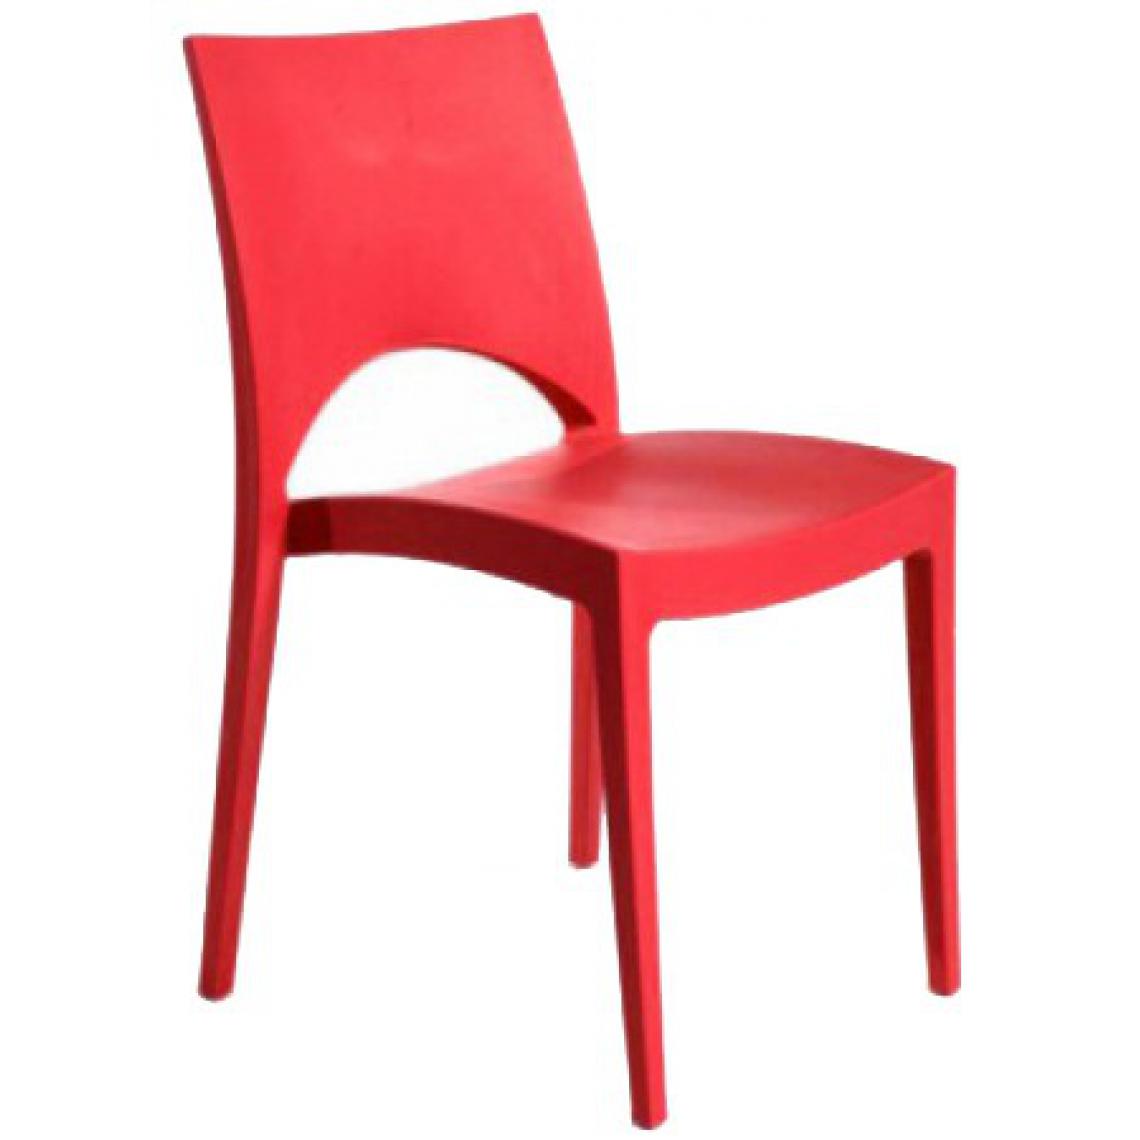 3S. x Home - Chaise Design Rouge VENISE - Chaises